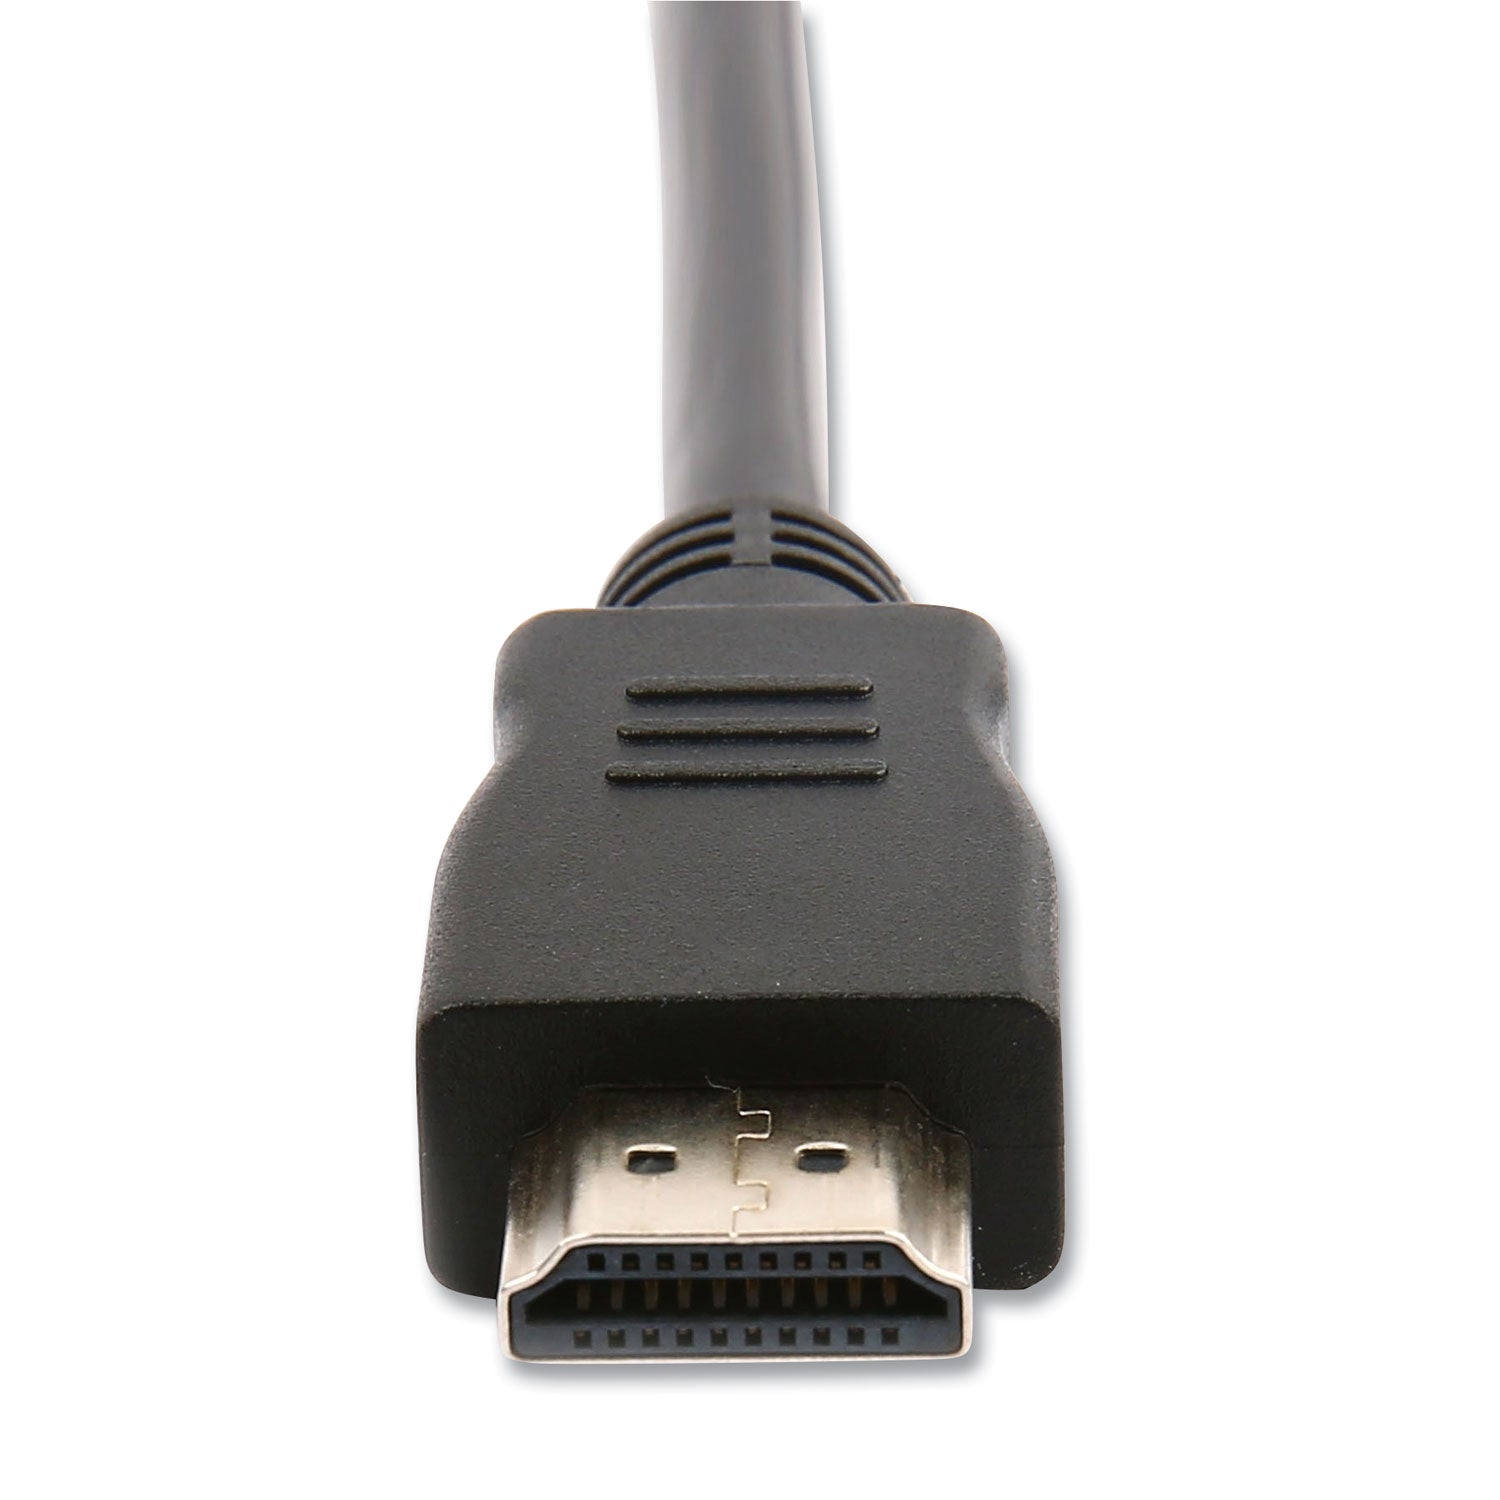 hdmi-version-14-cable-6-ft-black_ivr30024 - 2